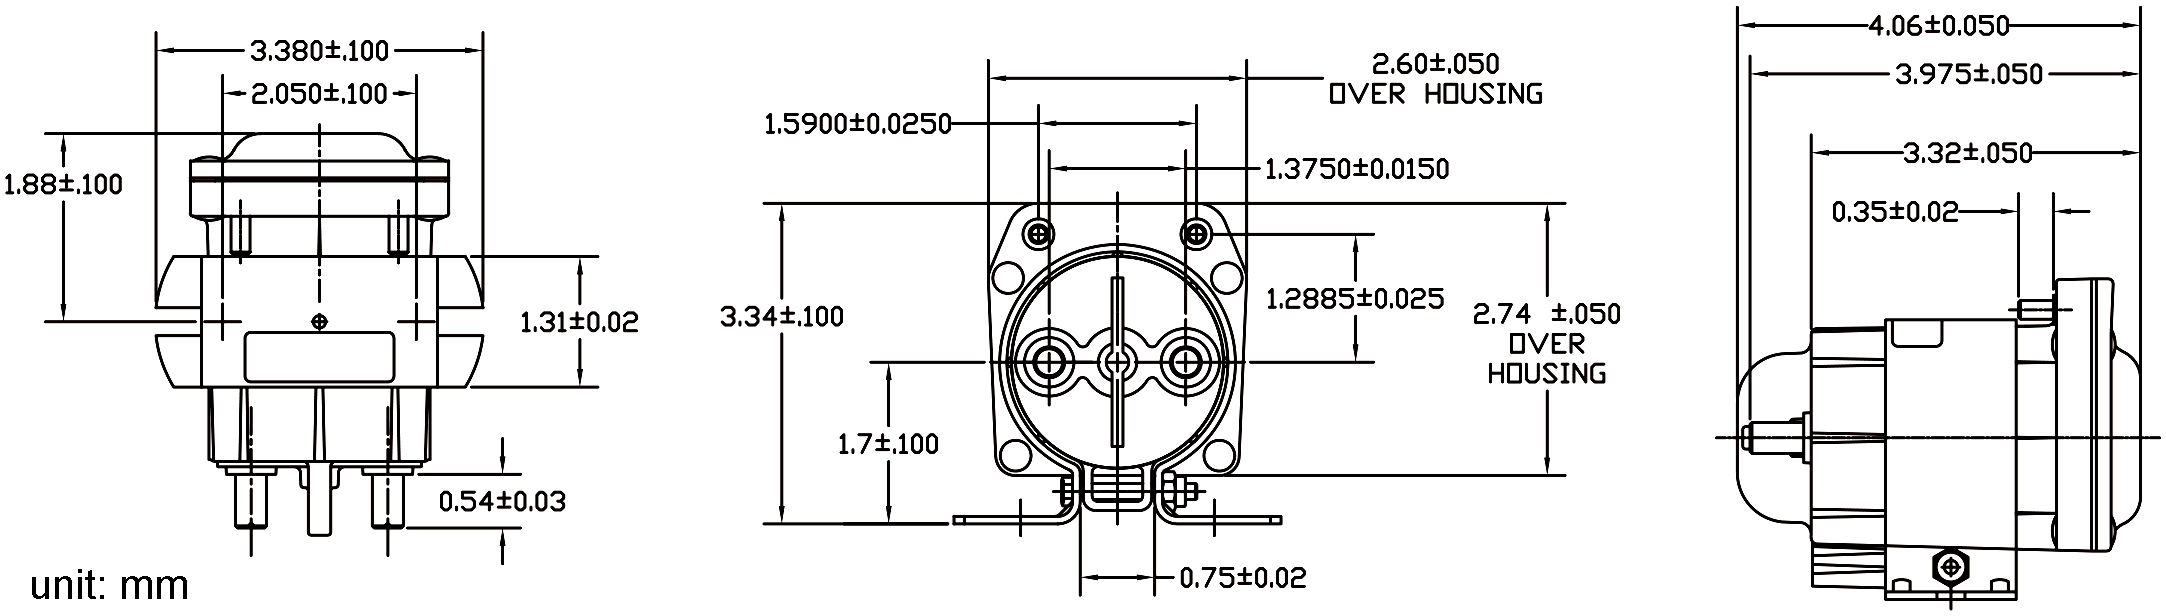 Yamaha JU6-H1950-00-00, Trombetta 114-4811-020 DC Contactor Dimensions